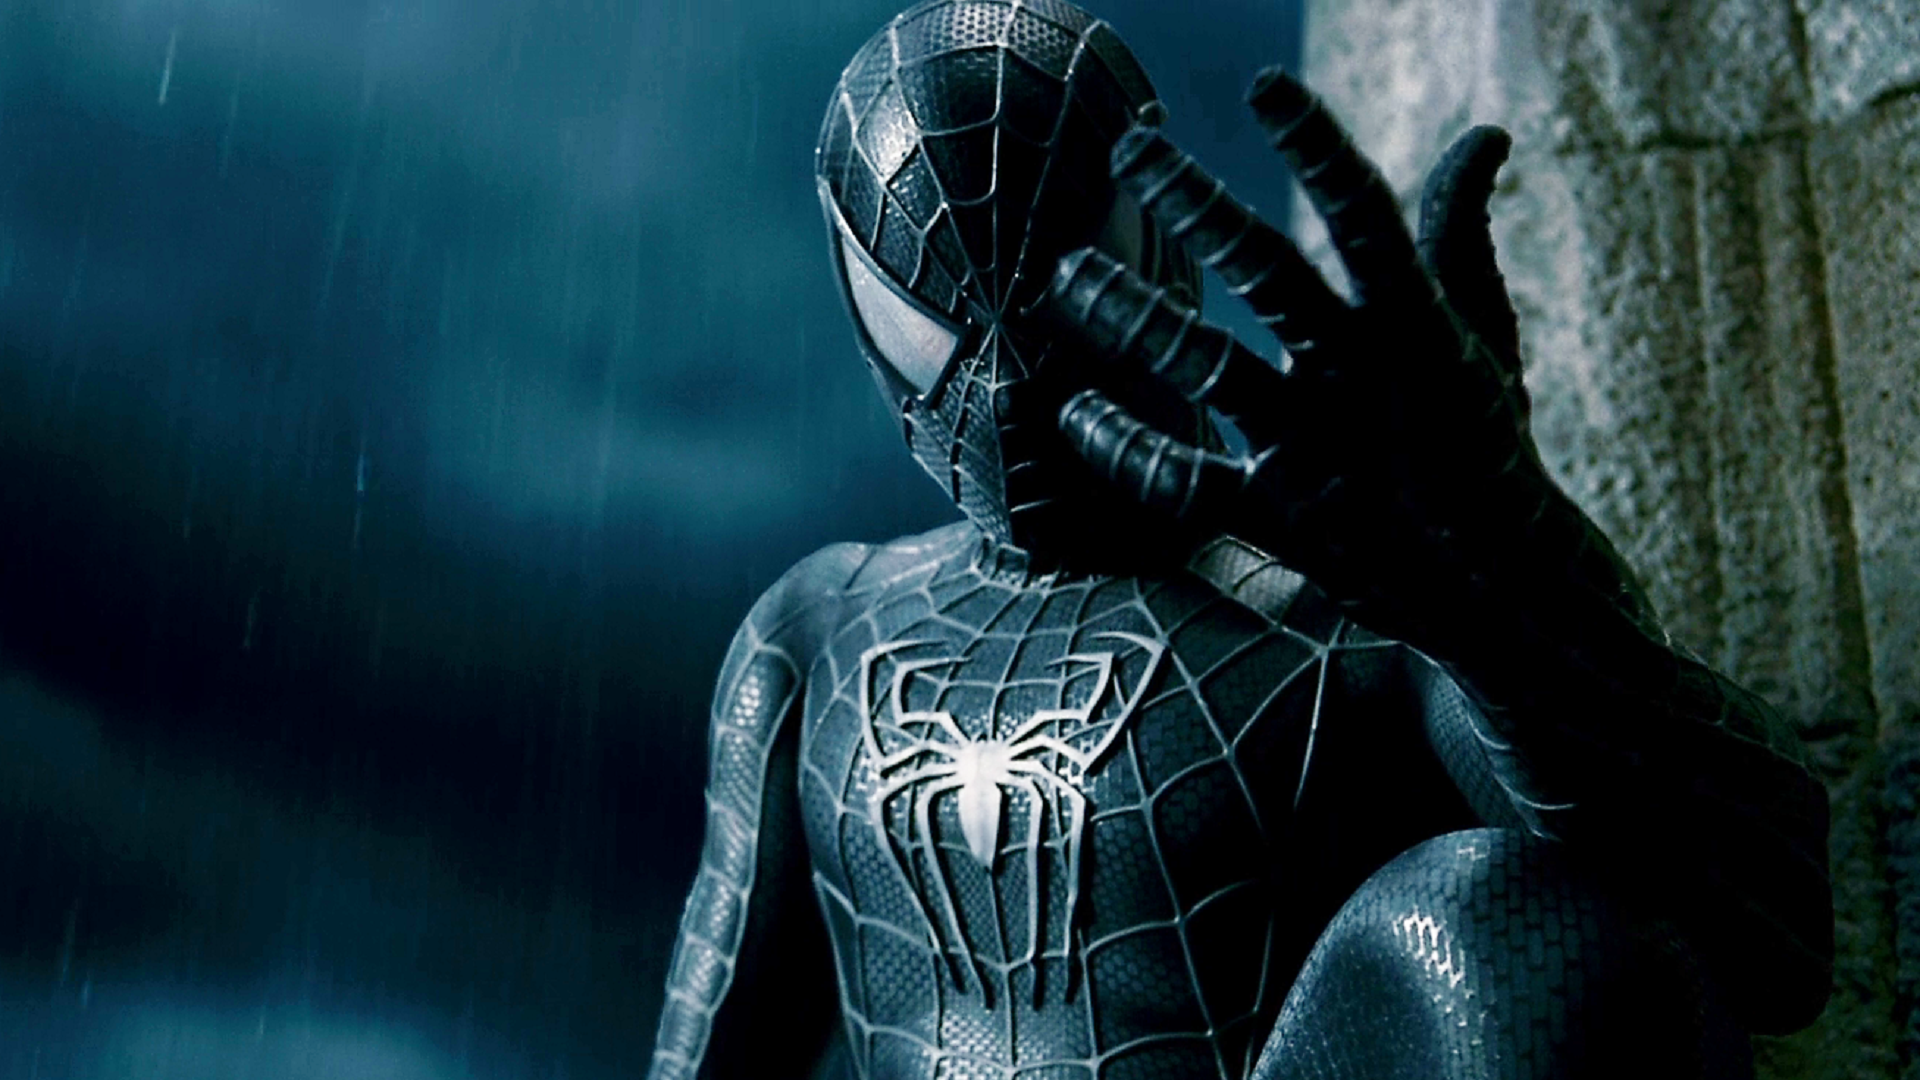 Spider-Man 3 movie-themed HD desktop wallpaper featuring Spider-Man in action.